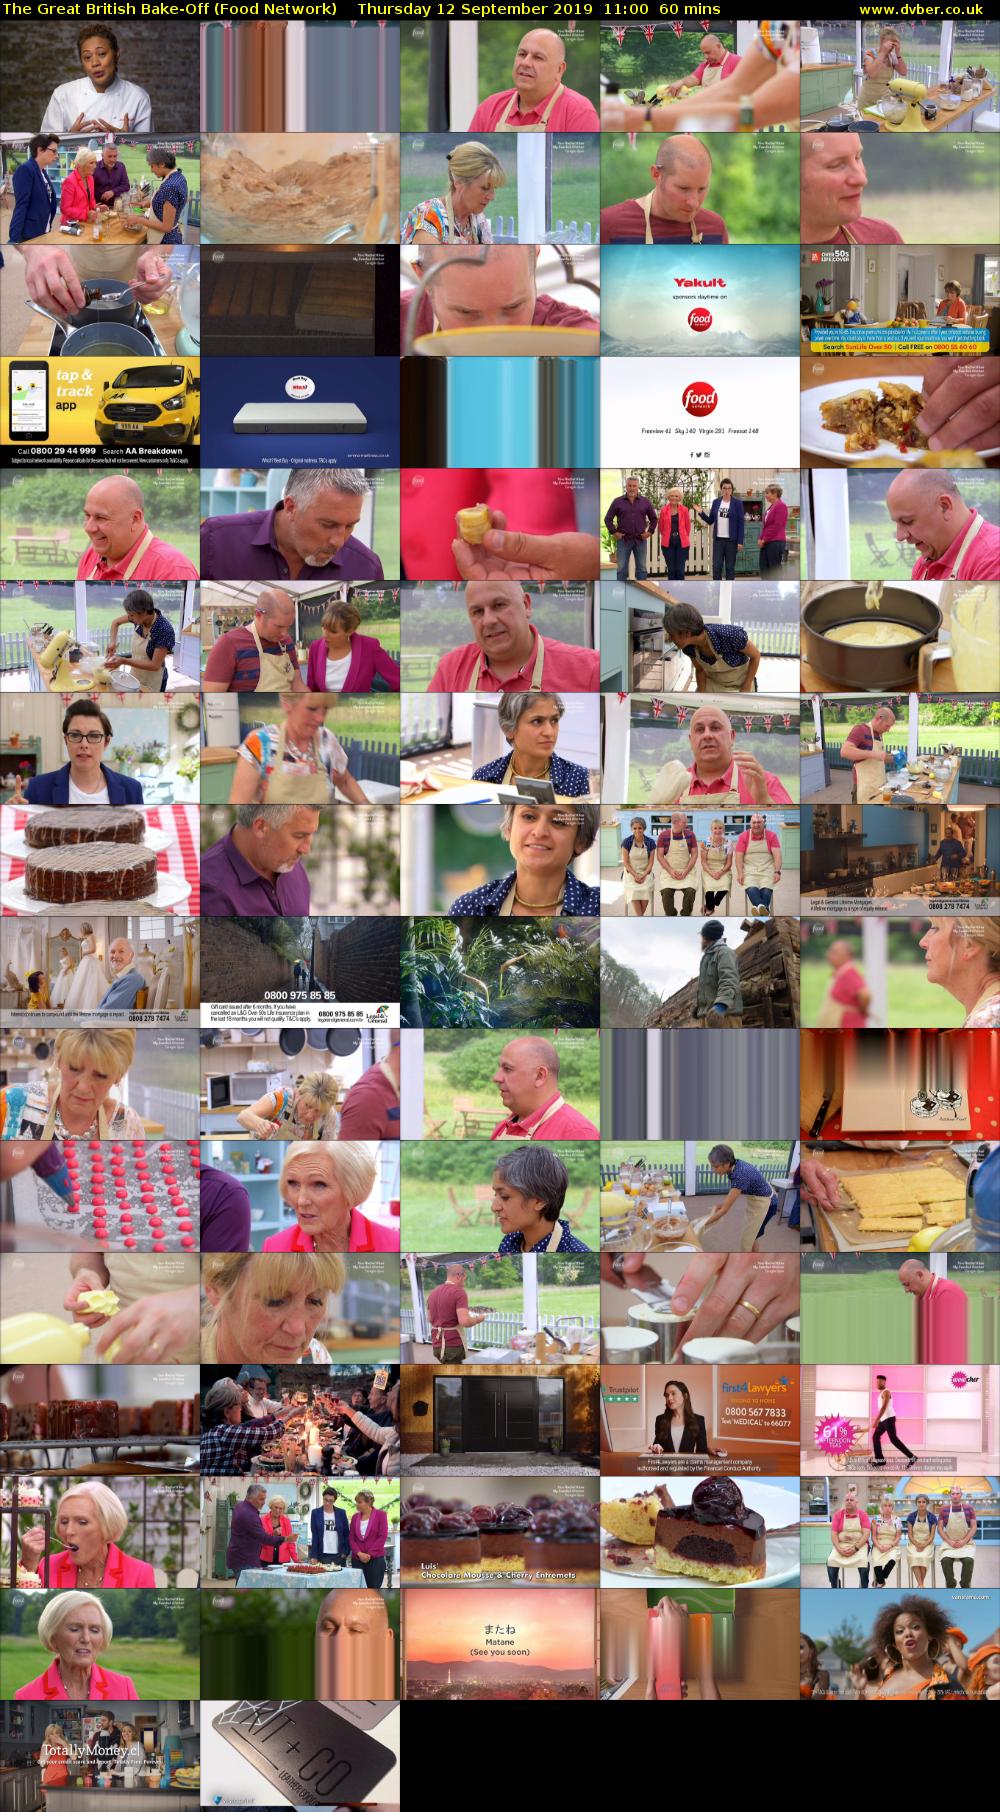 The Great British Bake-Off (Food Network) Thursday 12 September 2019 11:00 - 12:00